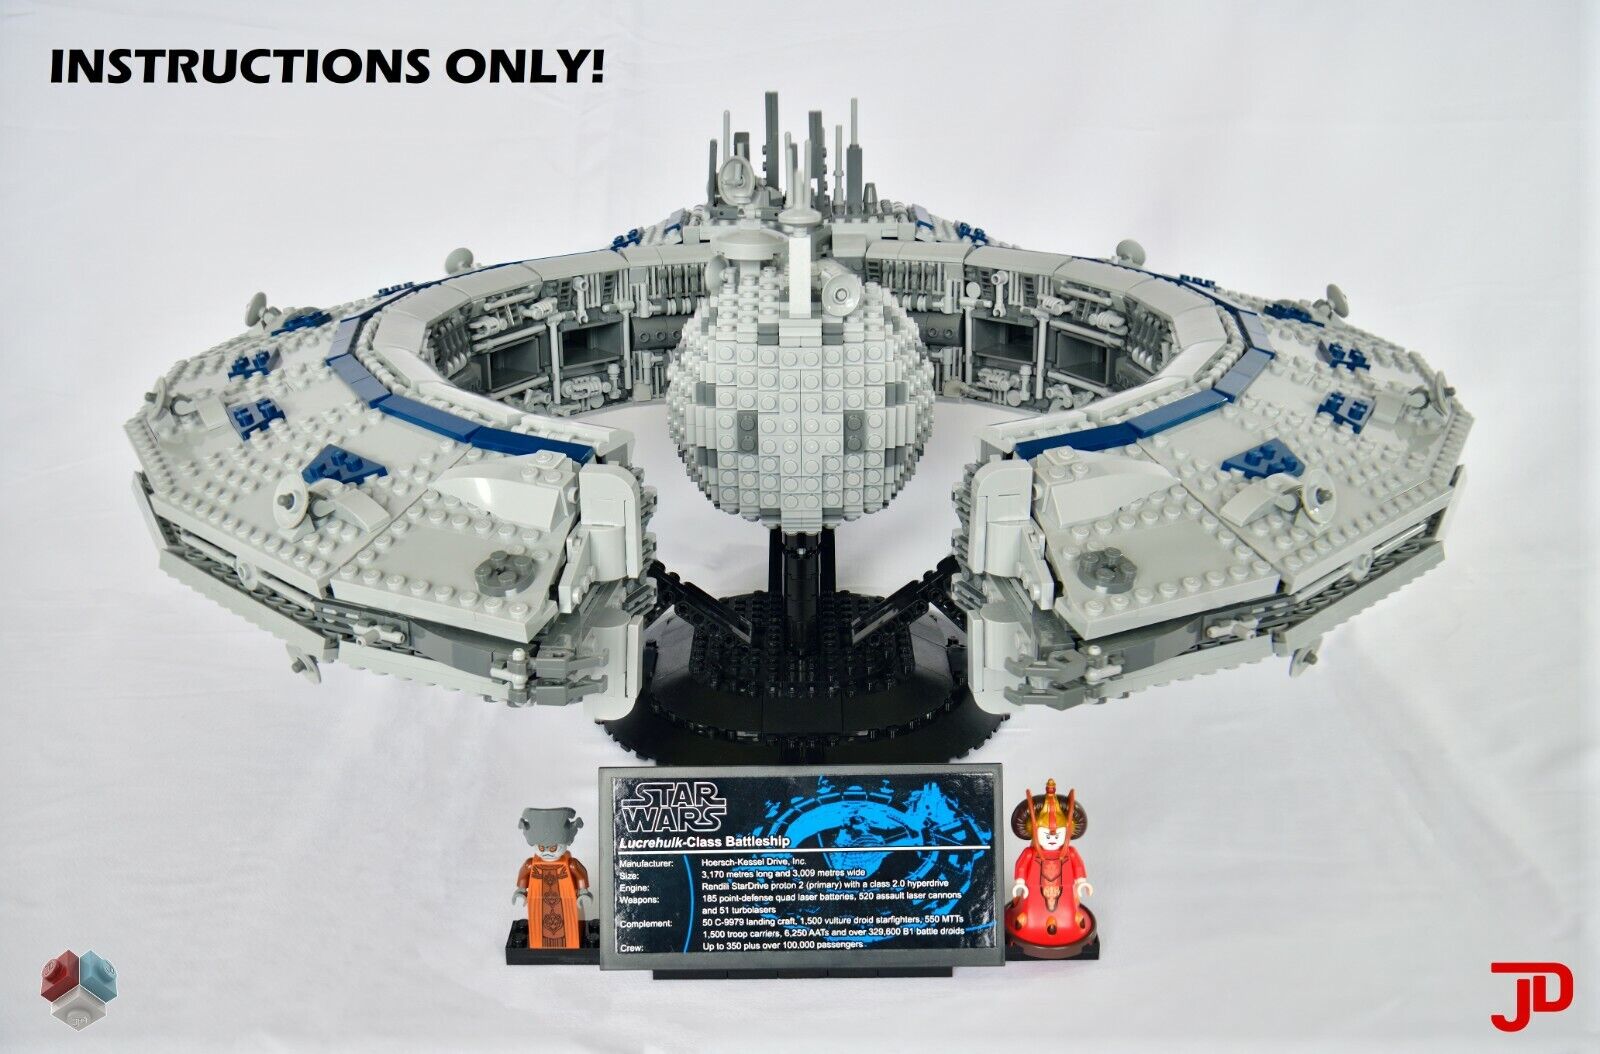 LEGO Star Wars UCS Lucrehulk Battleship / Droid Control Ship INSTRUCTIONS ONLY